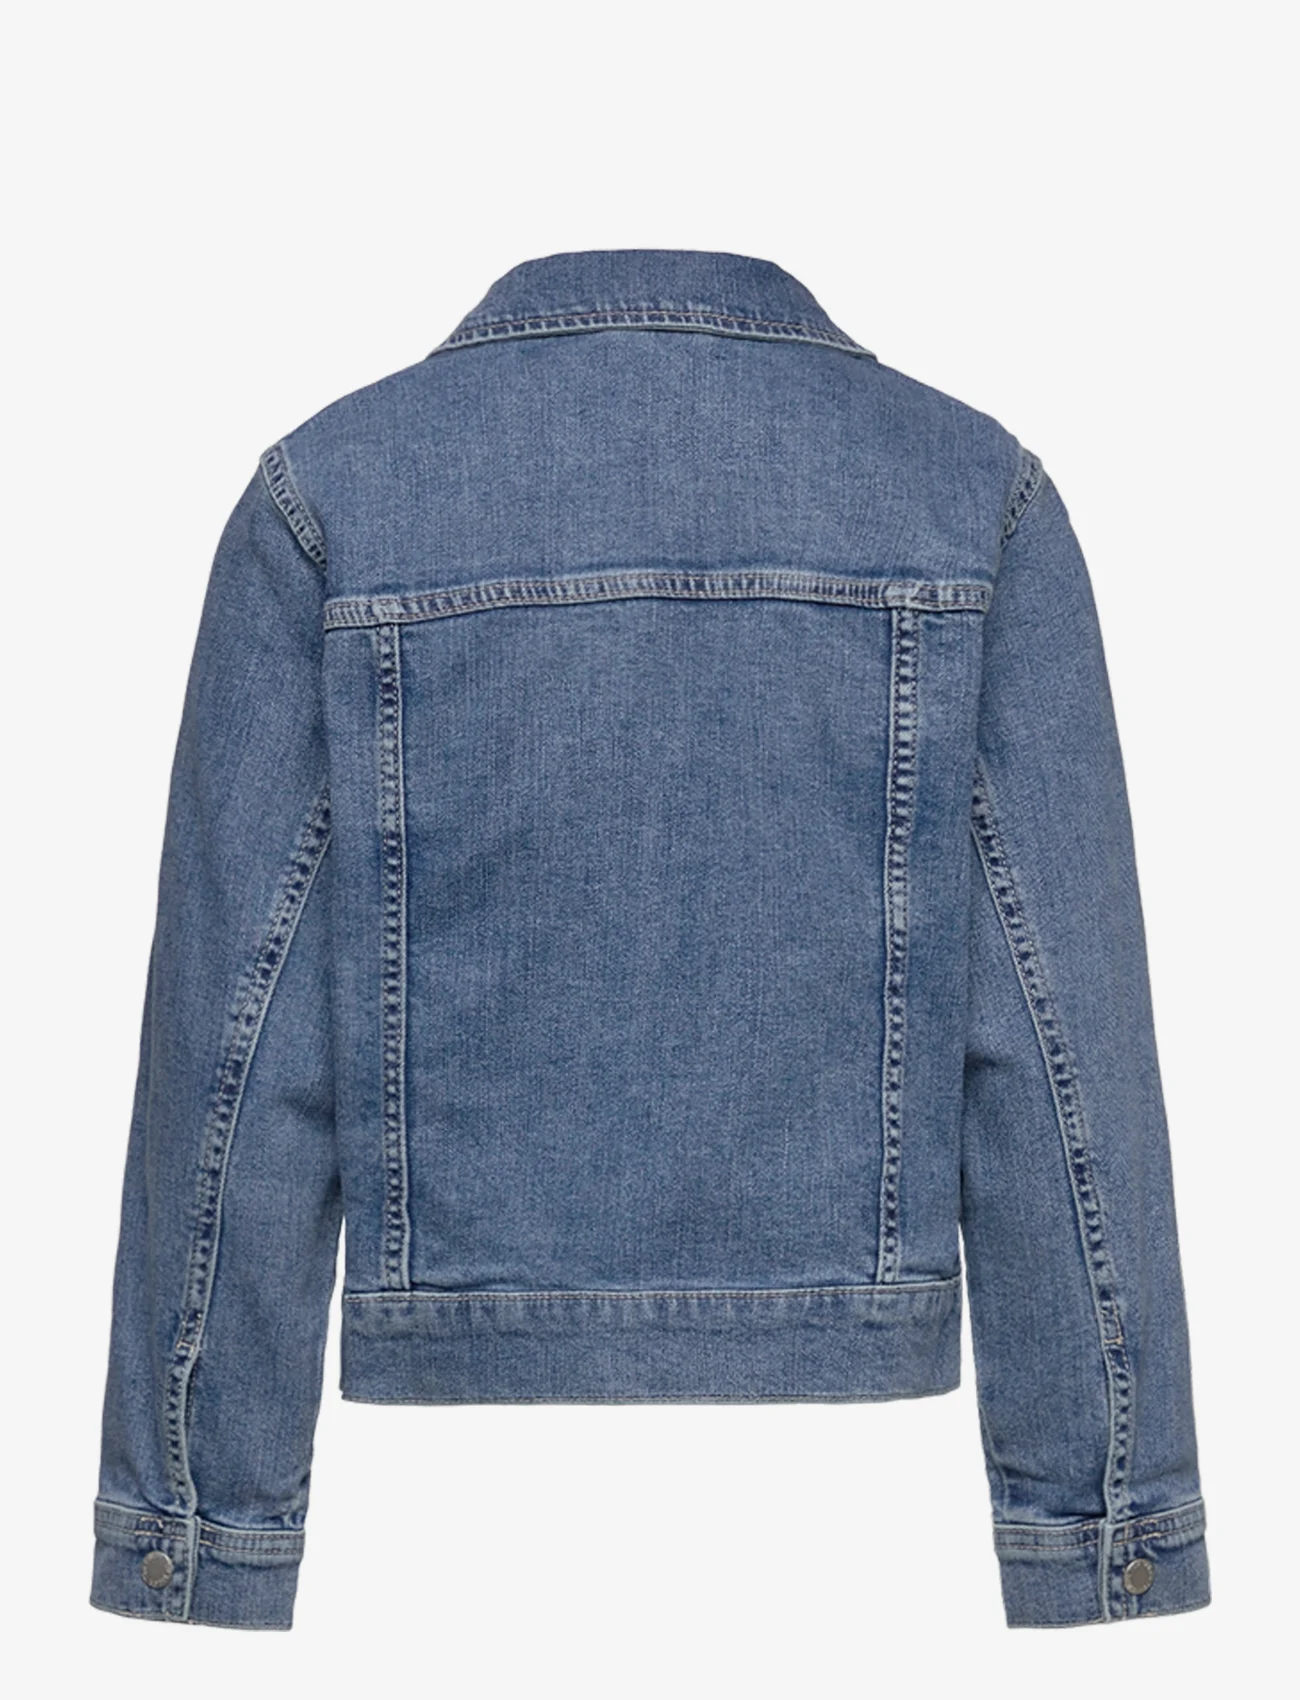 Tom Tailor - denim jacket - laveste priser - used mid stone blue denim - 1